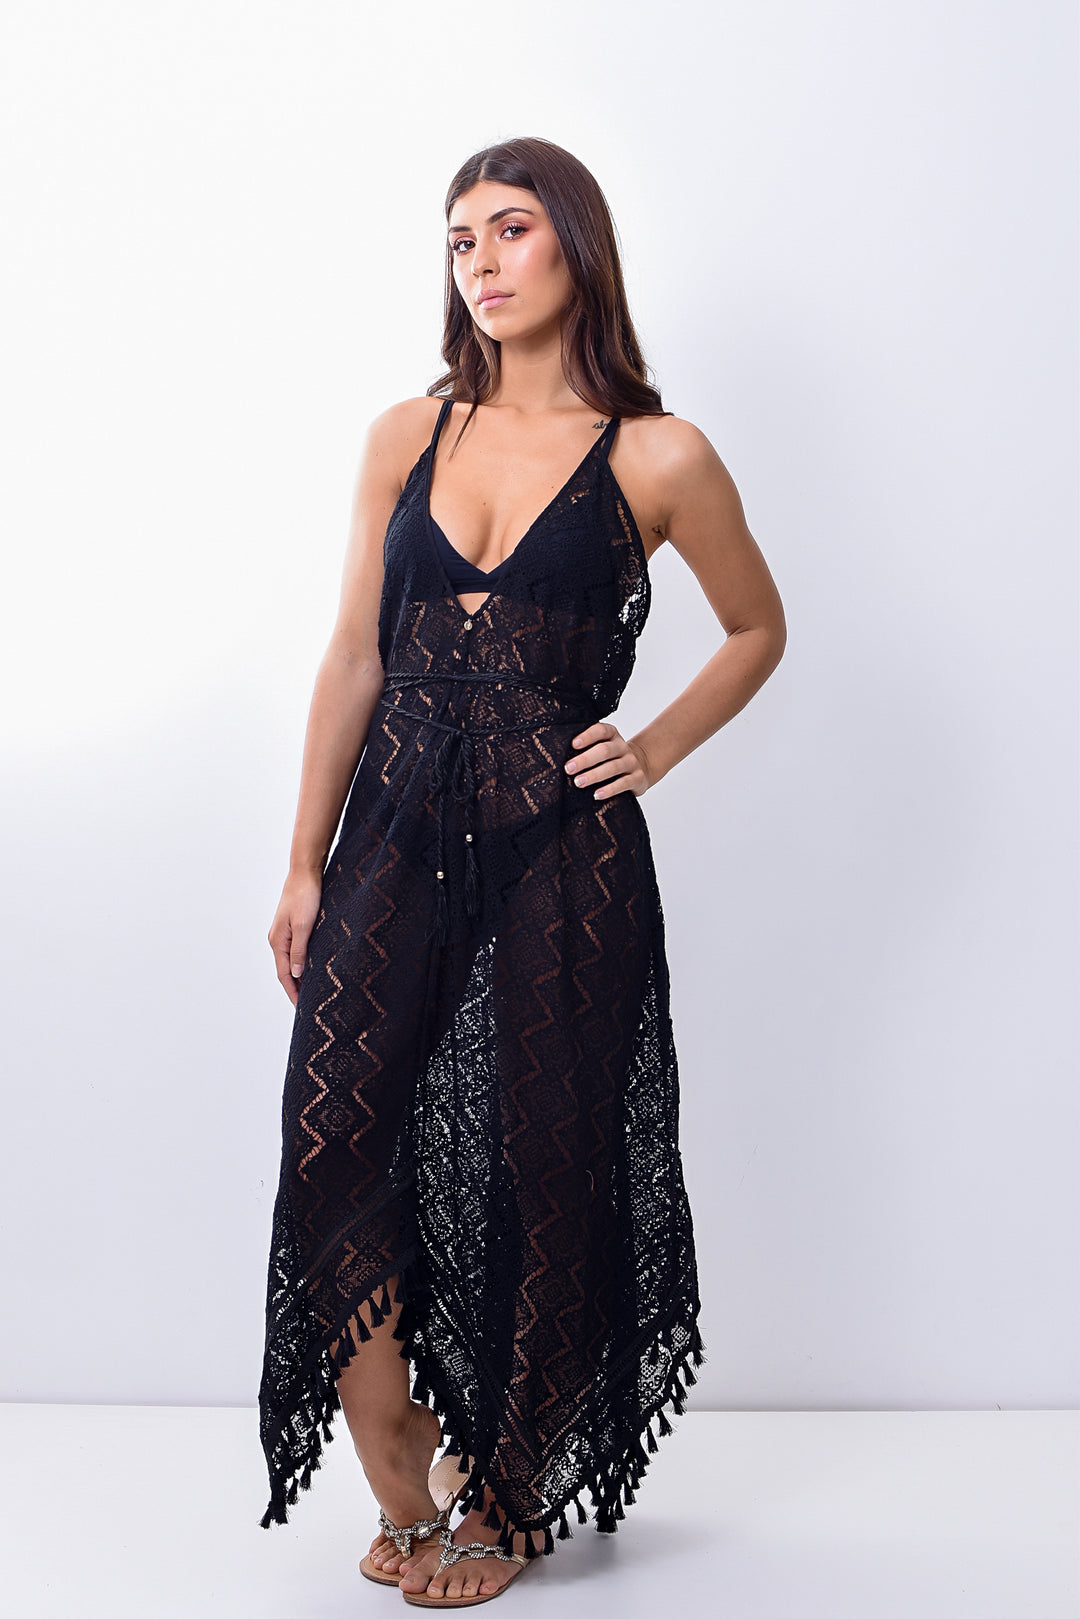 Black Lace Assimetric Long Dress - Lybethras Swimwear